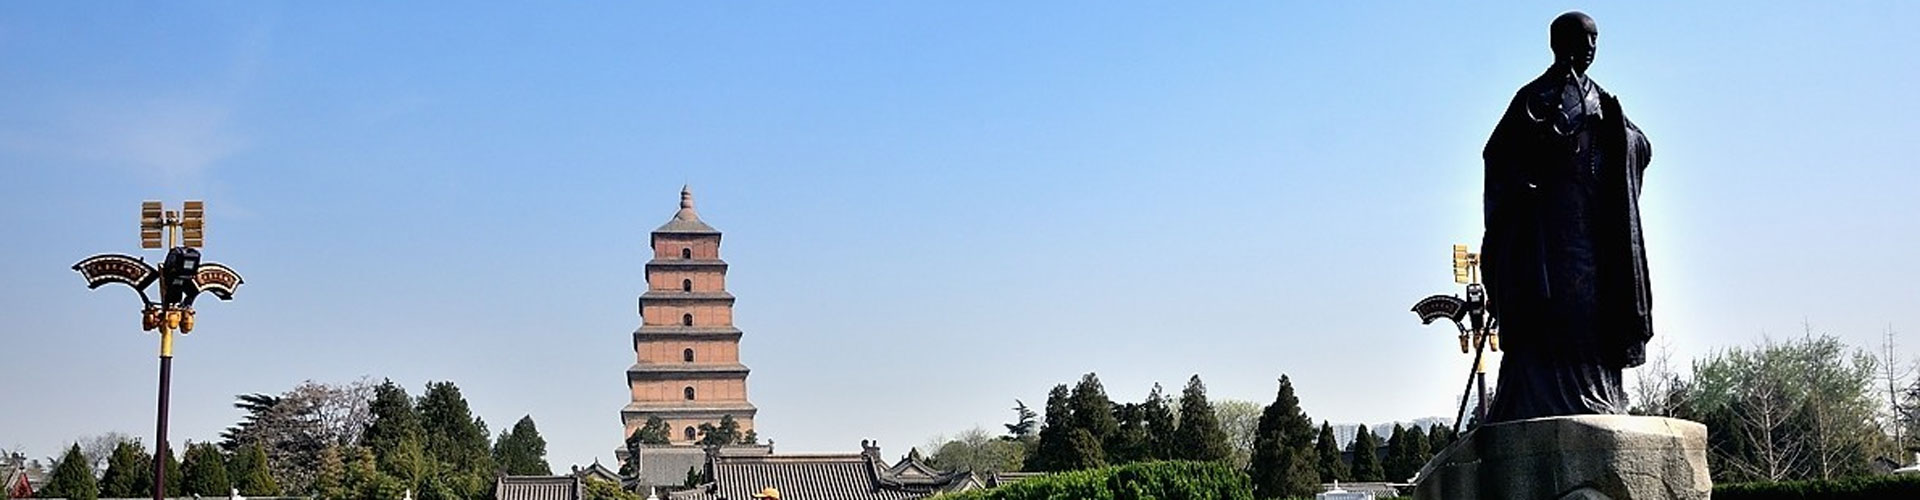 Gran Pagoda de Oca Salvaje